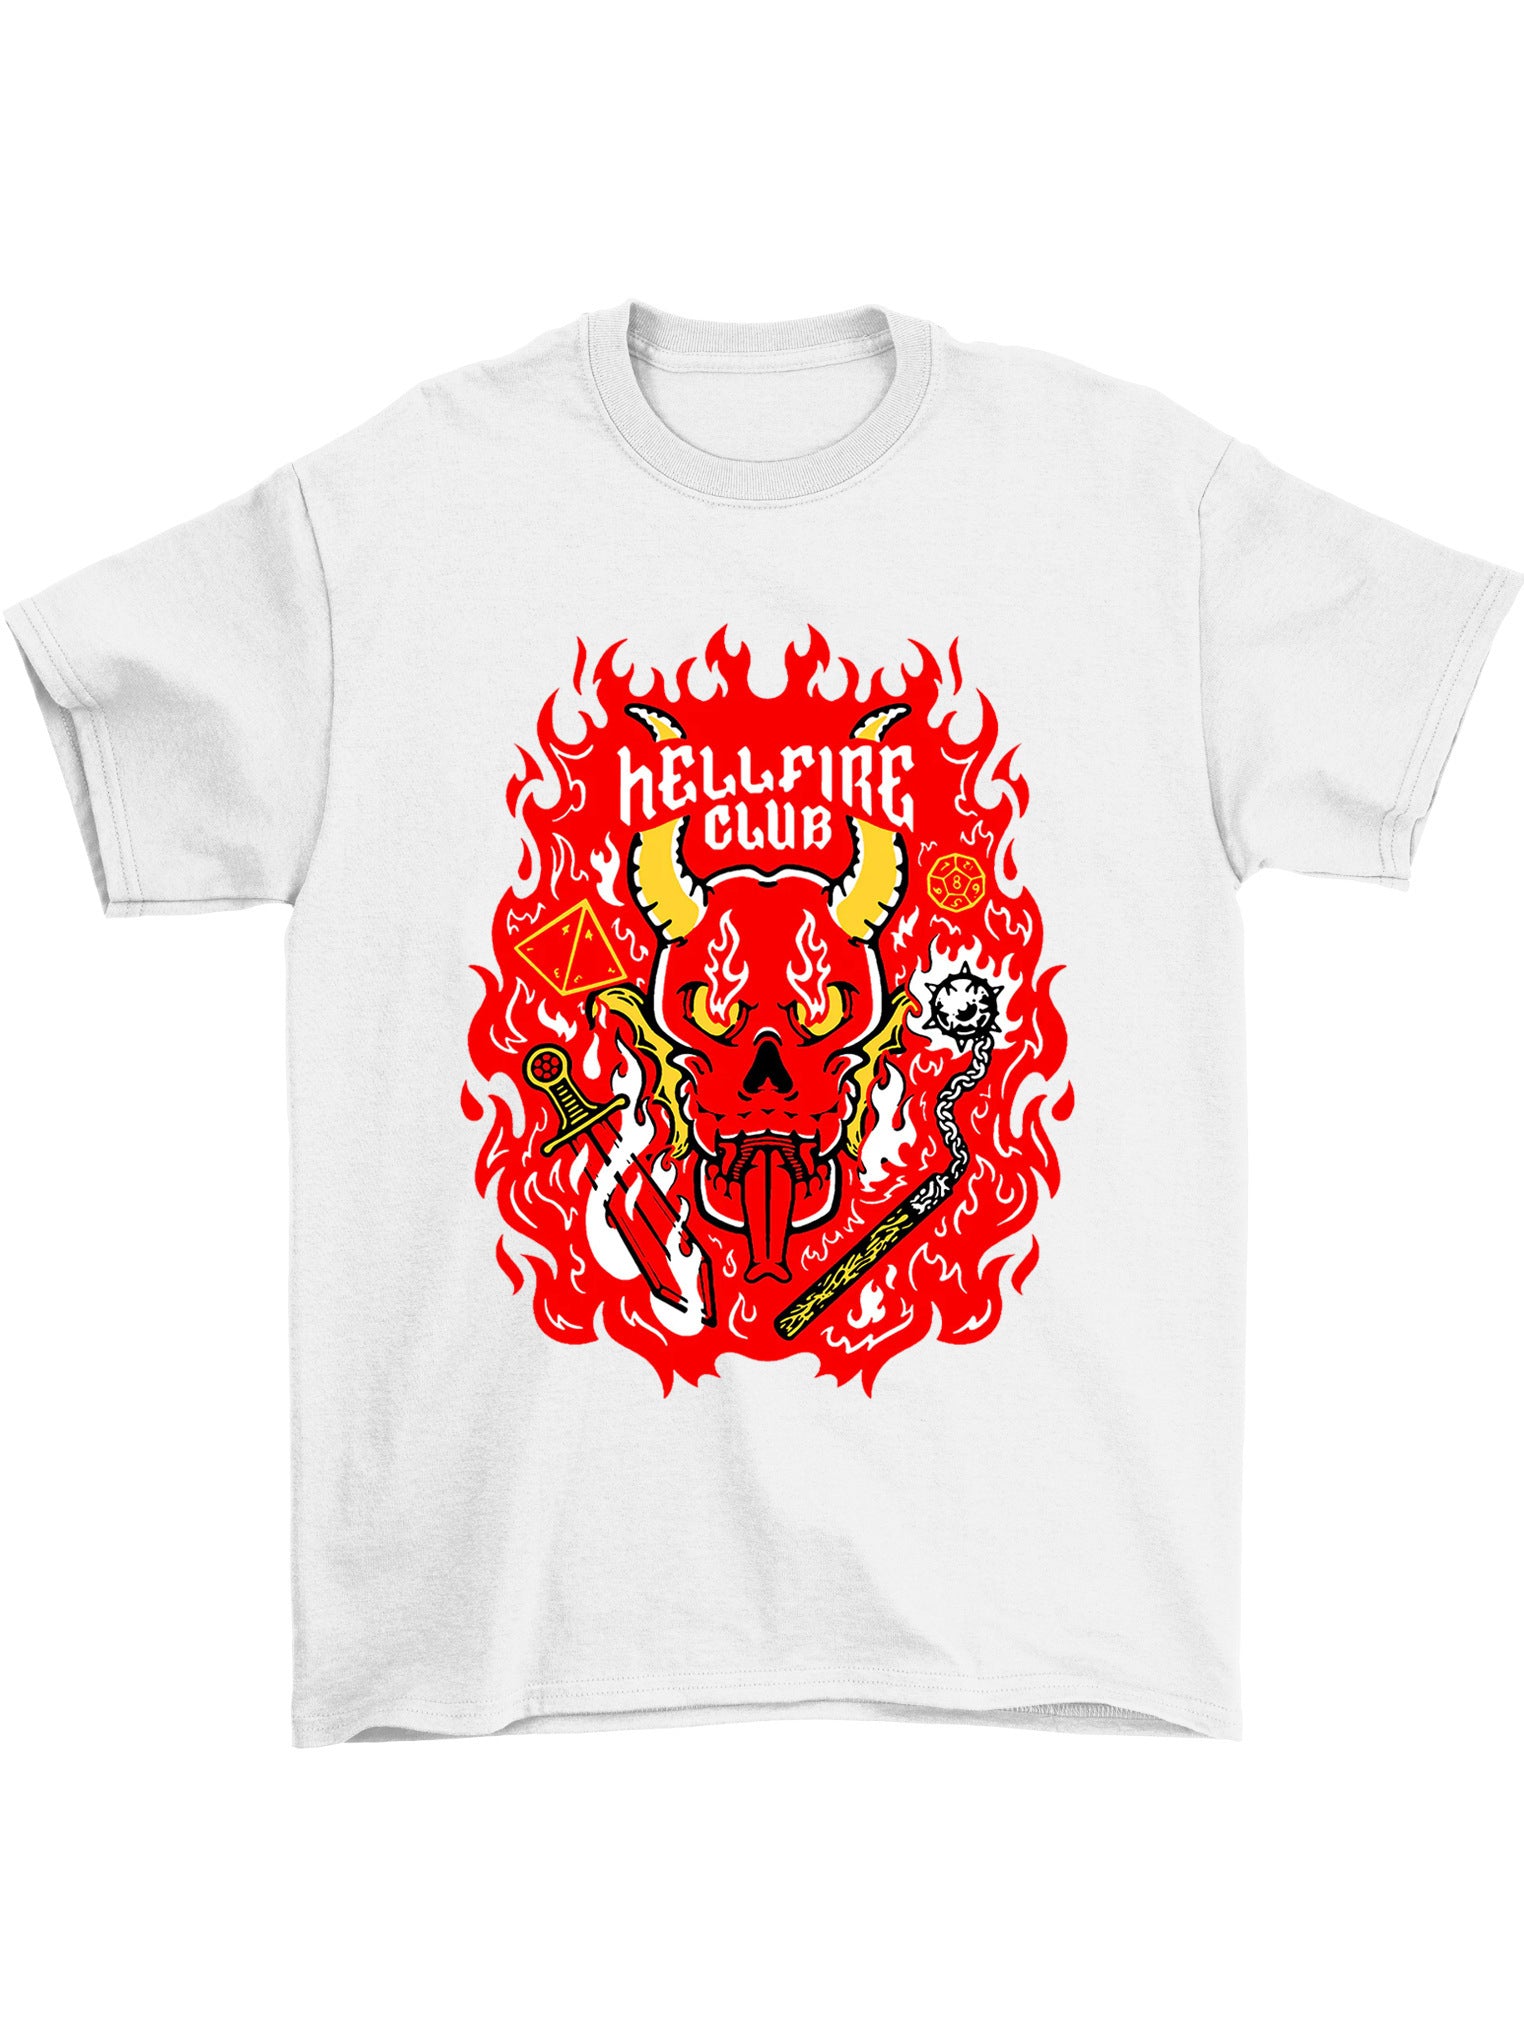 Graphic Hellfire Club T-shirts Cool Shirts